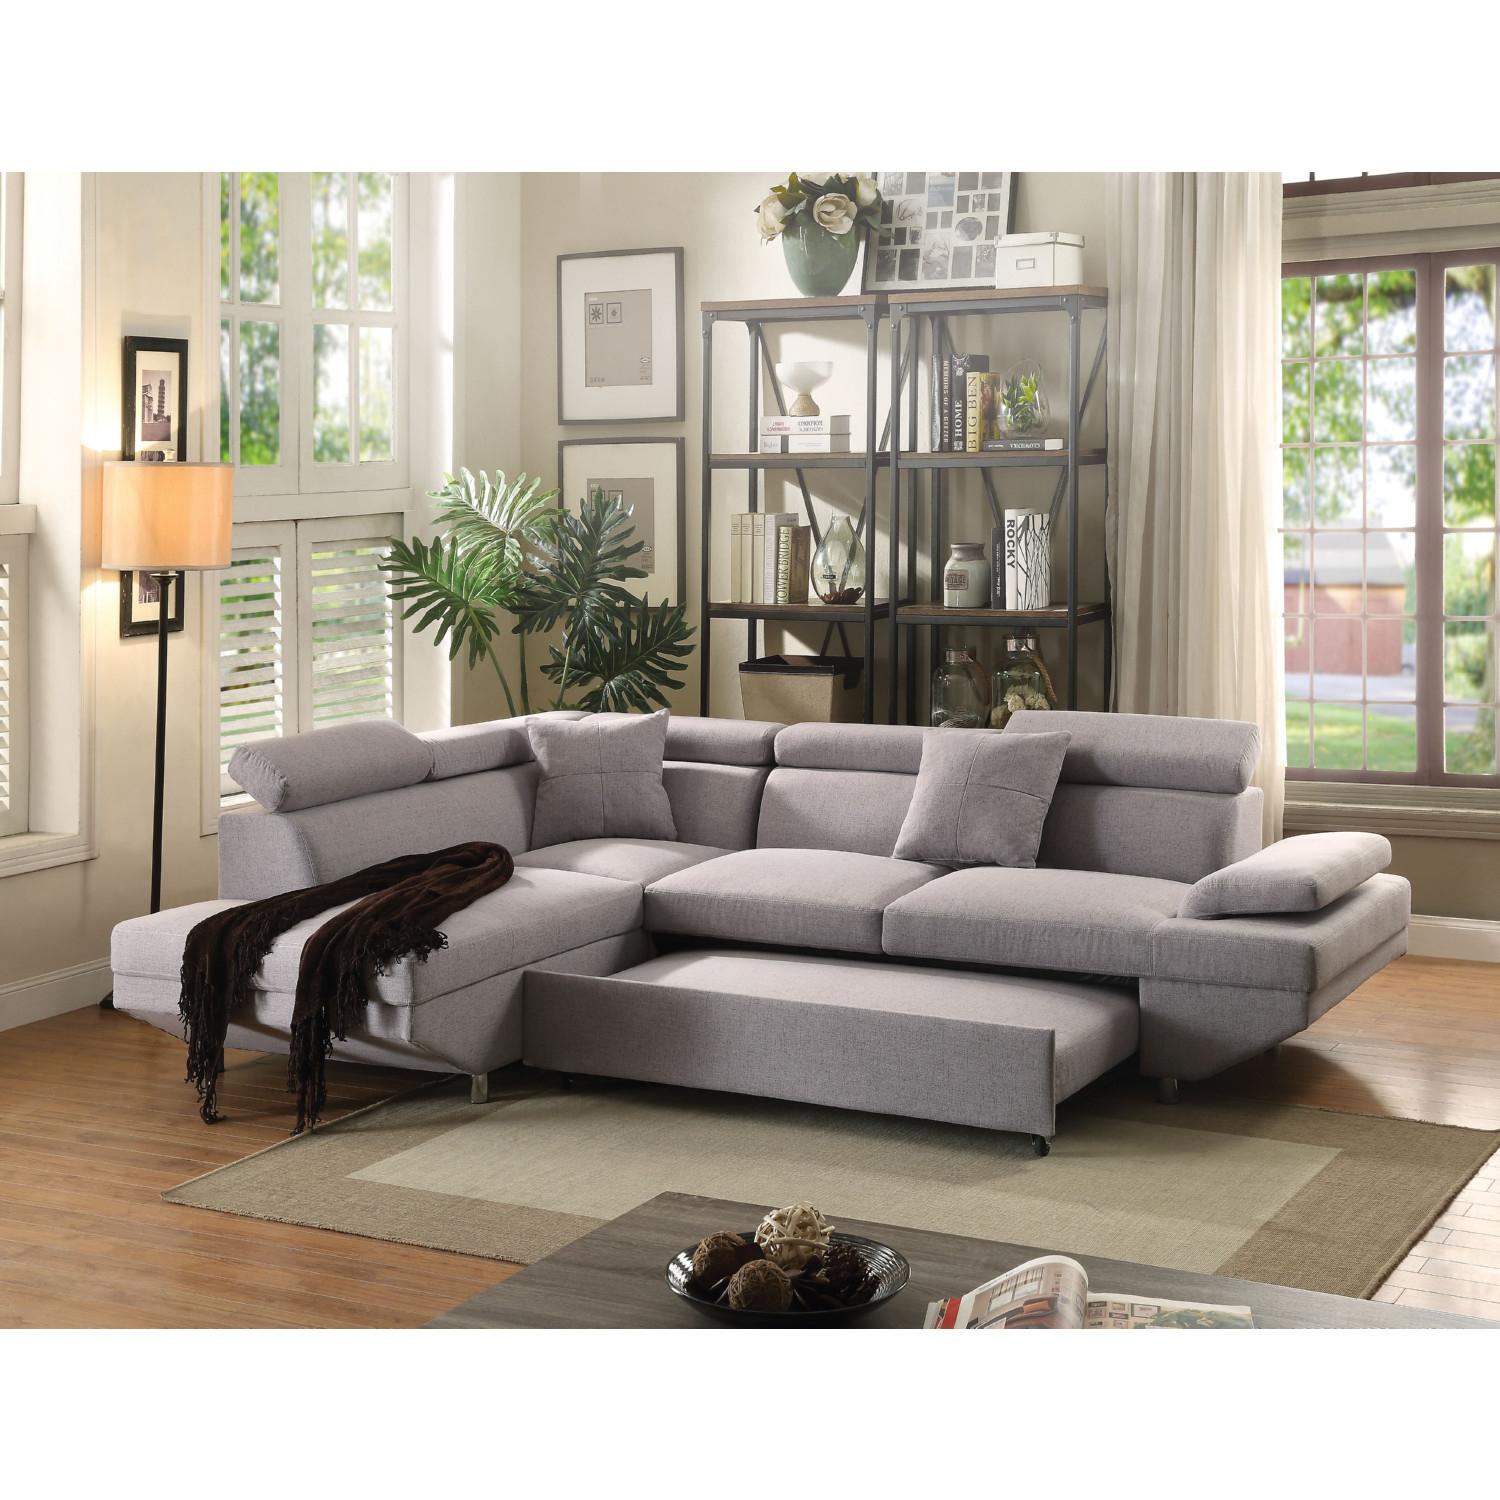 Modern, Classic Sectional Sofa Jemima 52990-3pcs in Gray Fabric